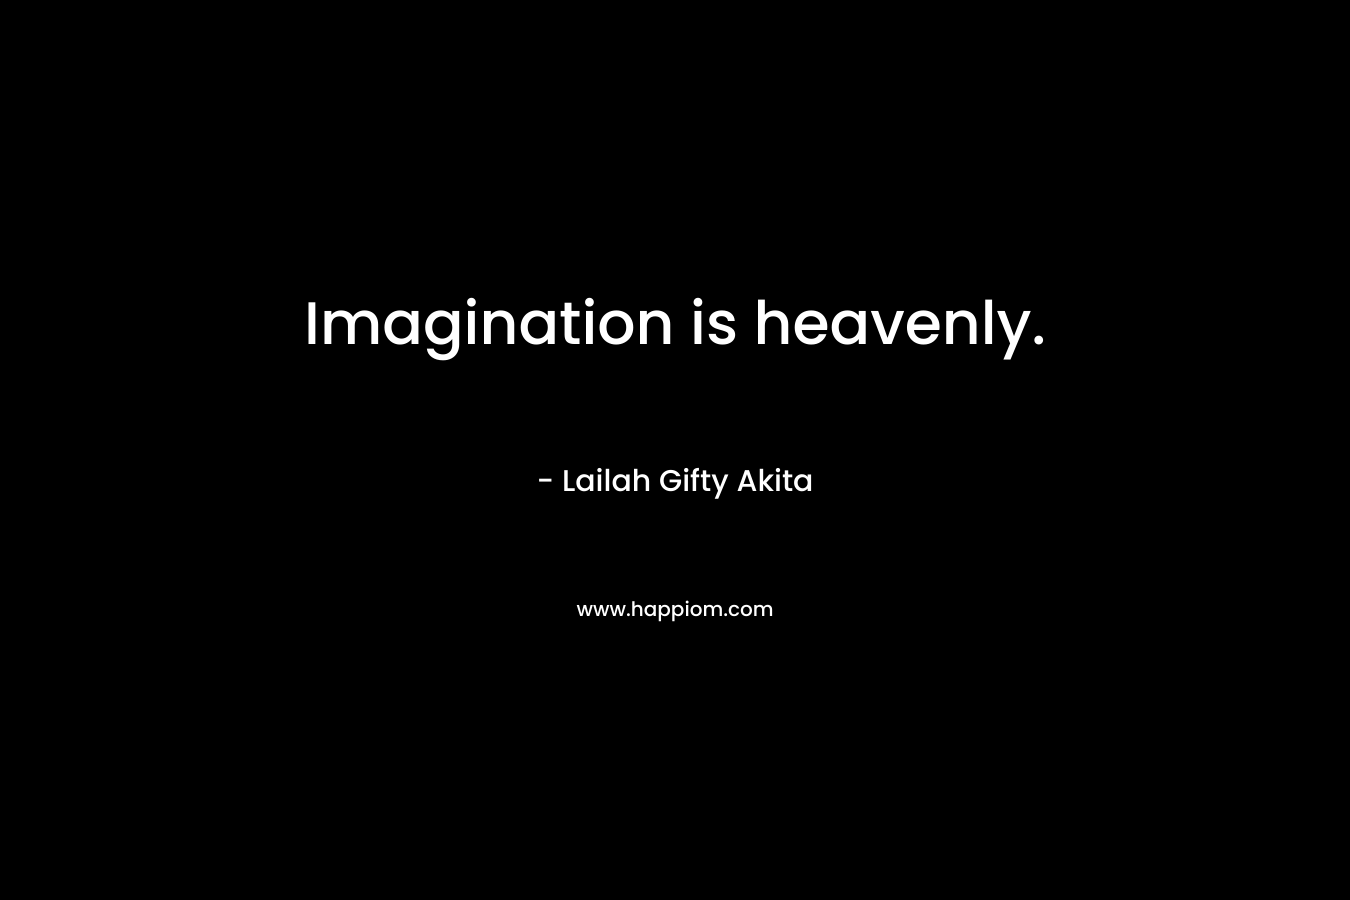 Imagination is heavenly.